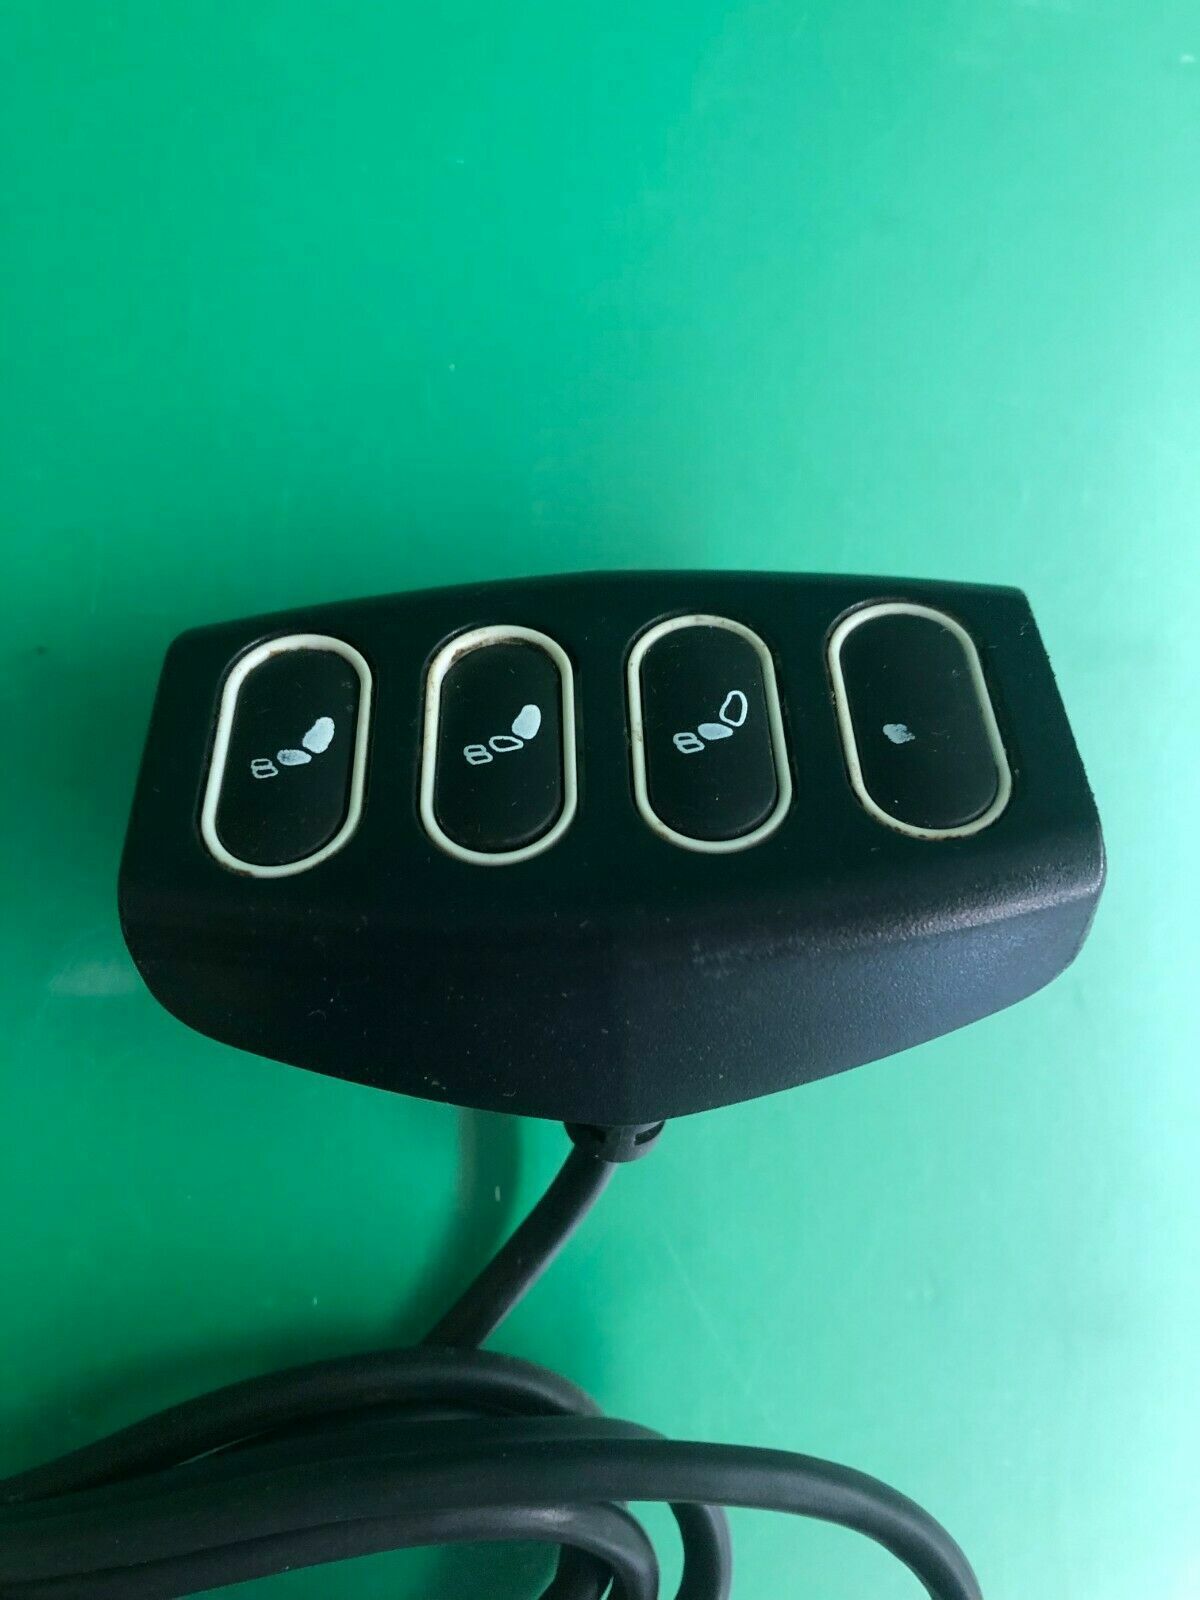 Pride Mobility Quantum Q6 Q-Logic power seat control keypad CTL123218 #G677